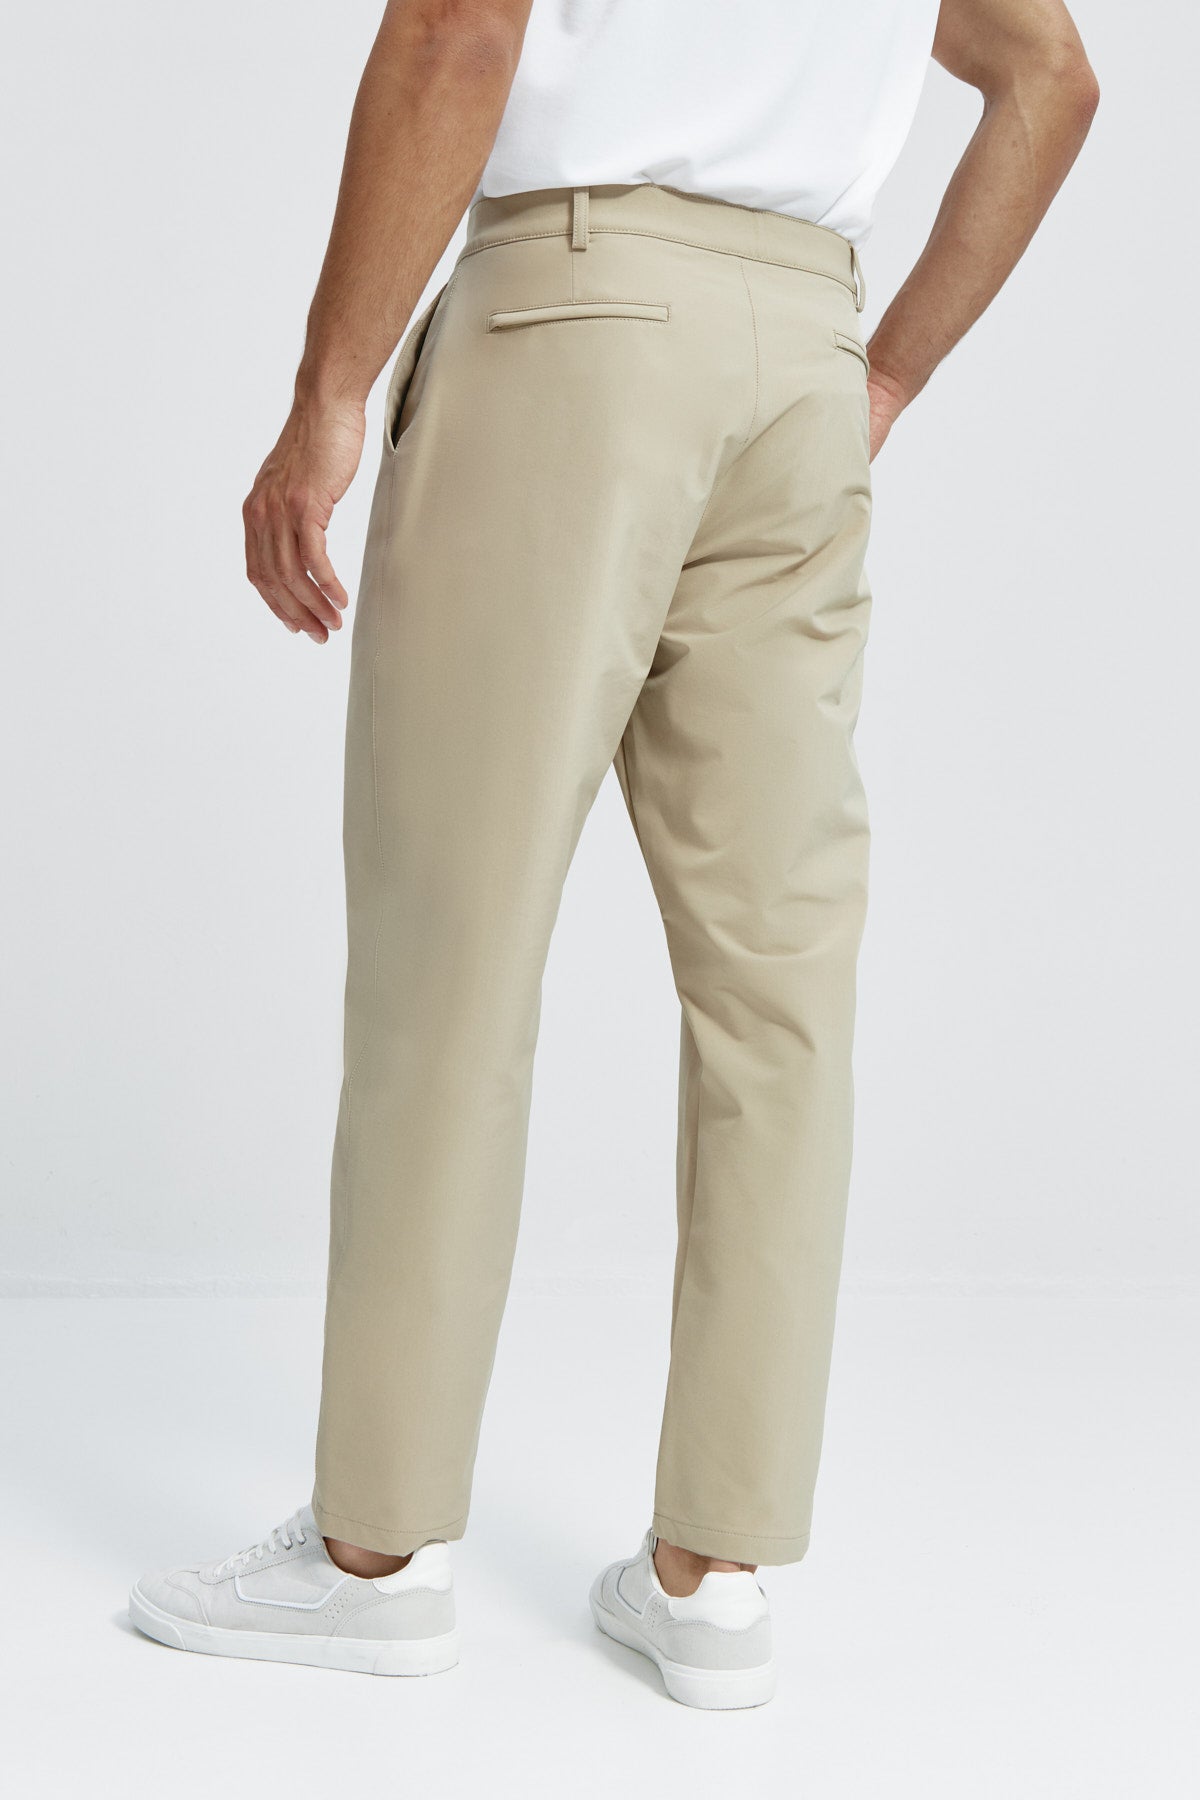 Pantalón chino regular beige para hombre con tecnología termorreguladora Coolmax. Foto espalda